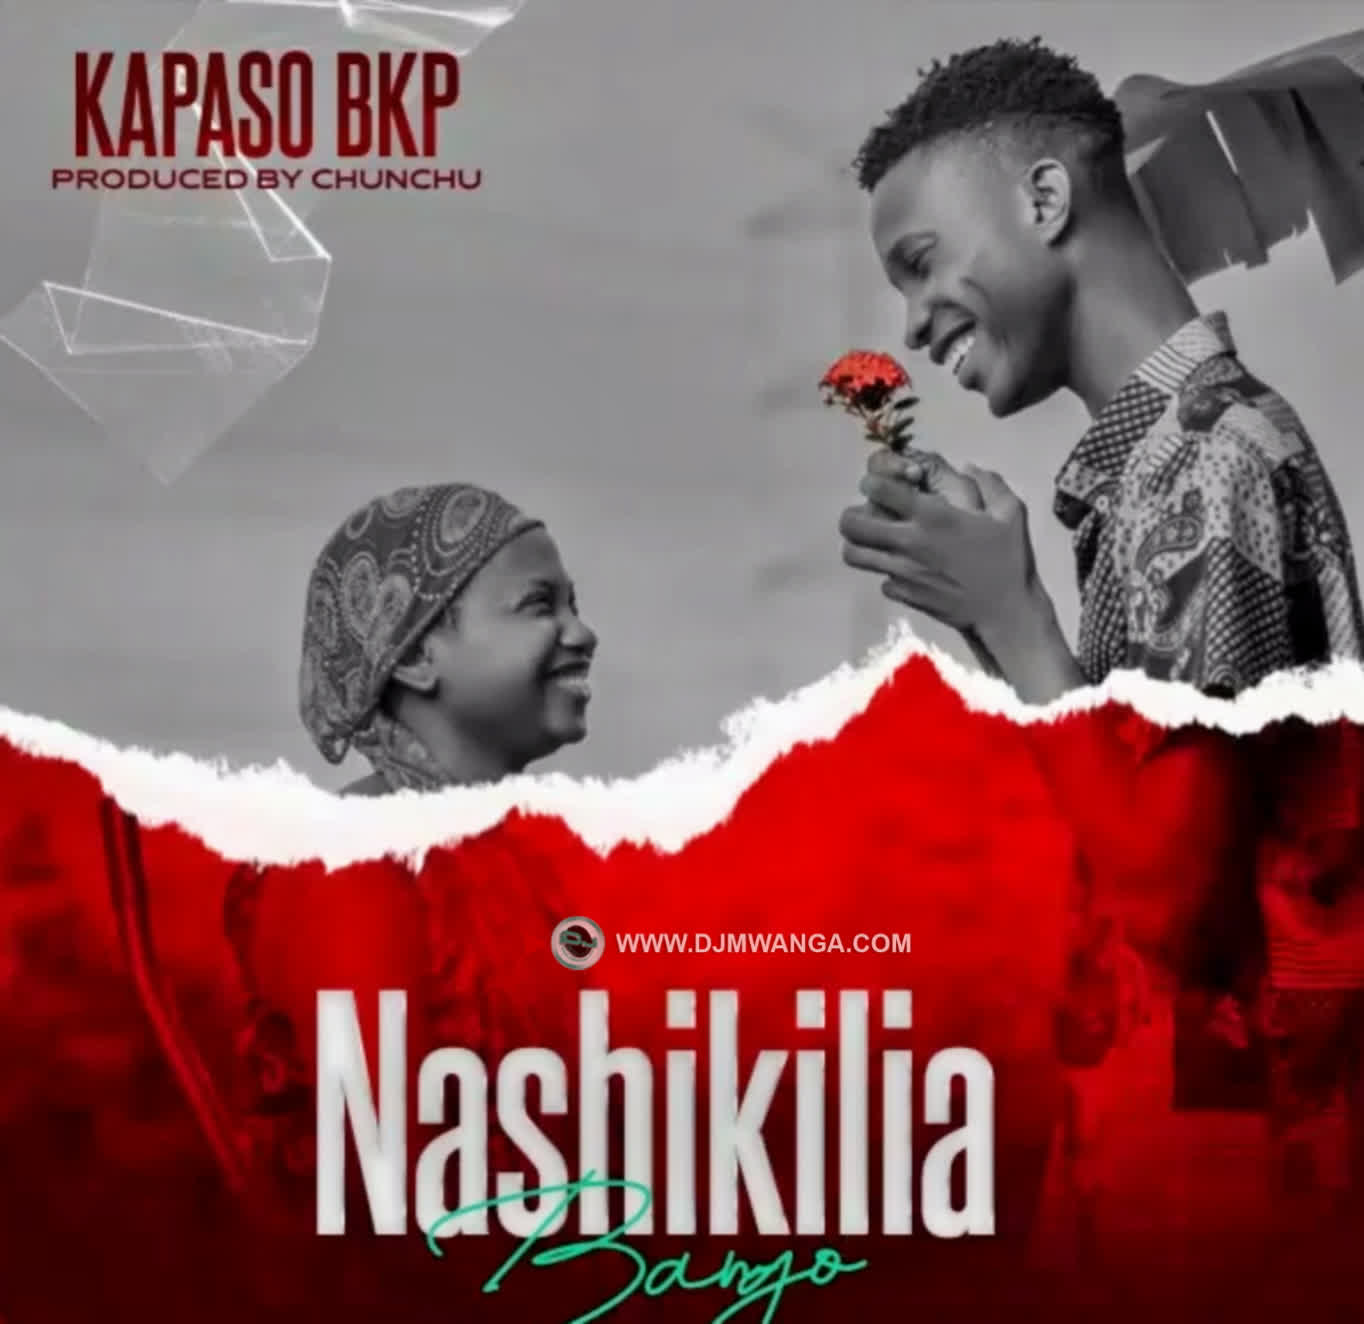 Download Audio | Kapaso Bkp – Nashikilia Bango